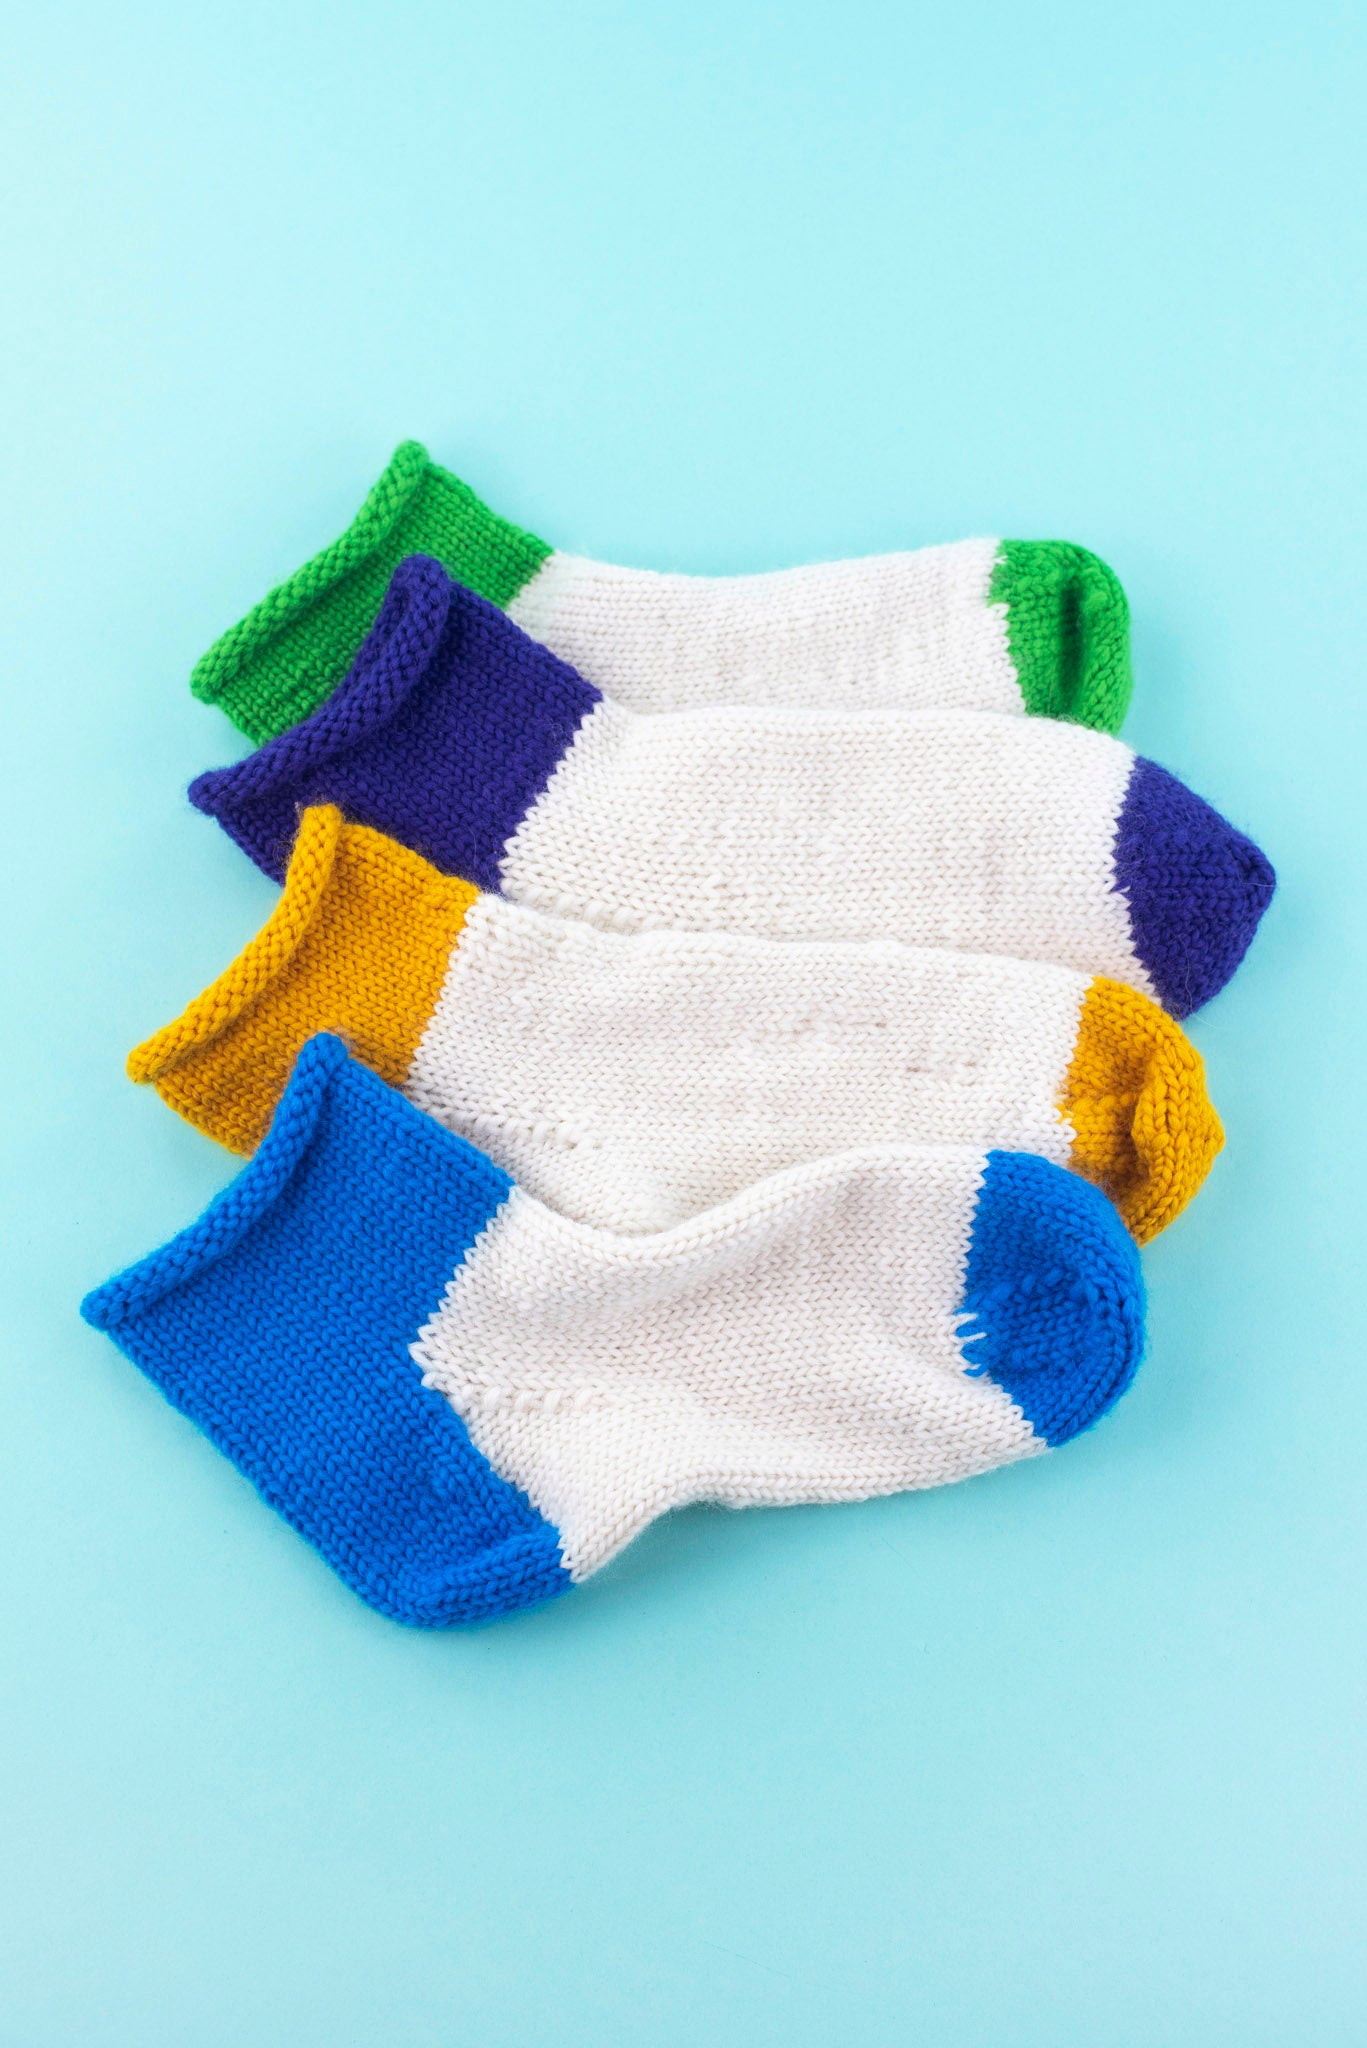 DIY Kit - My First Socks - Dream (Merino Worsted)